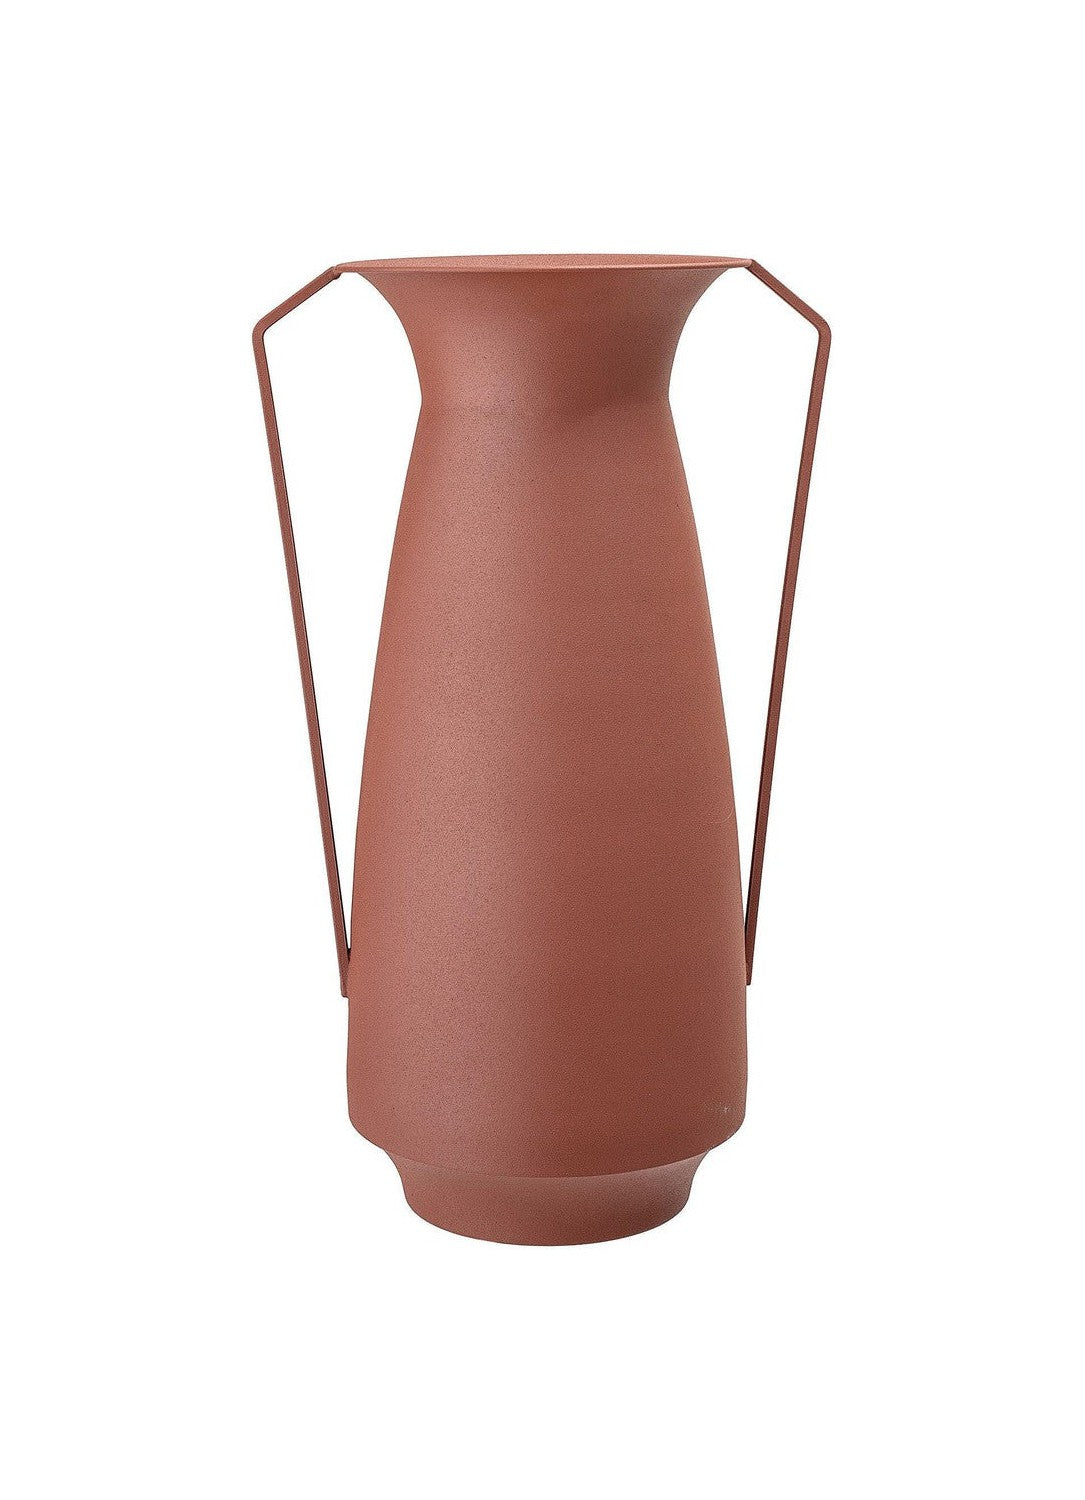 Vase Bloomingville Rikkegro, marron, métal